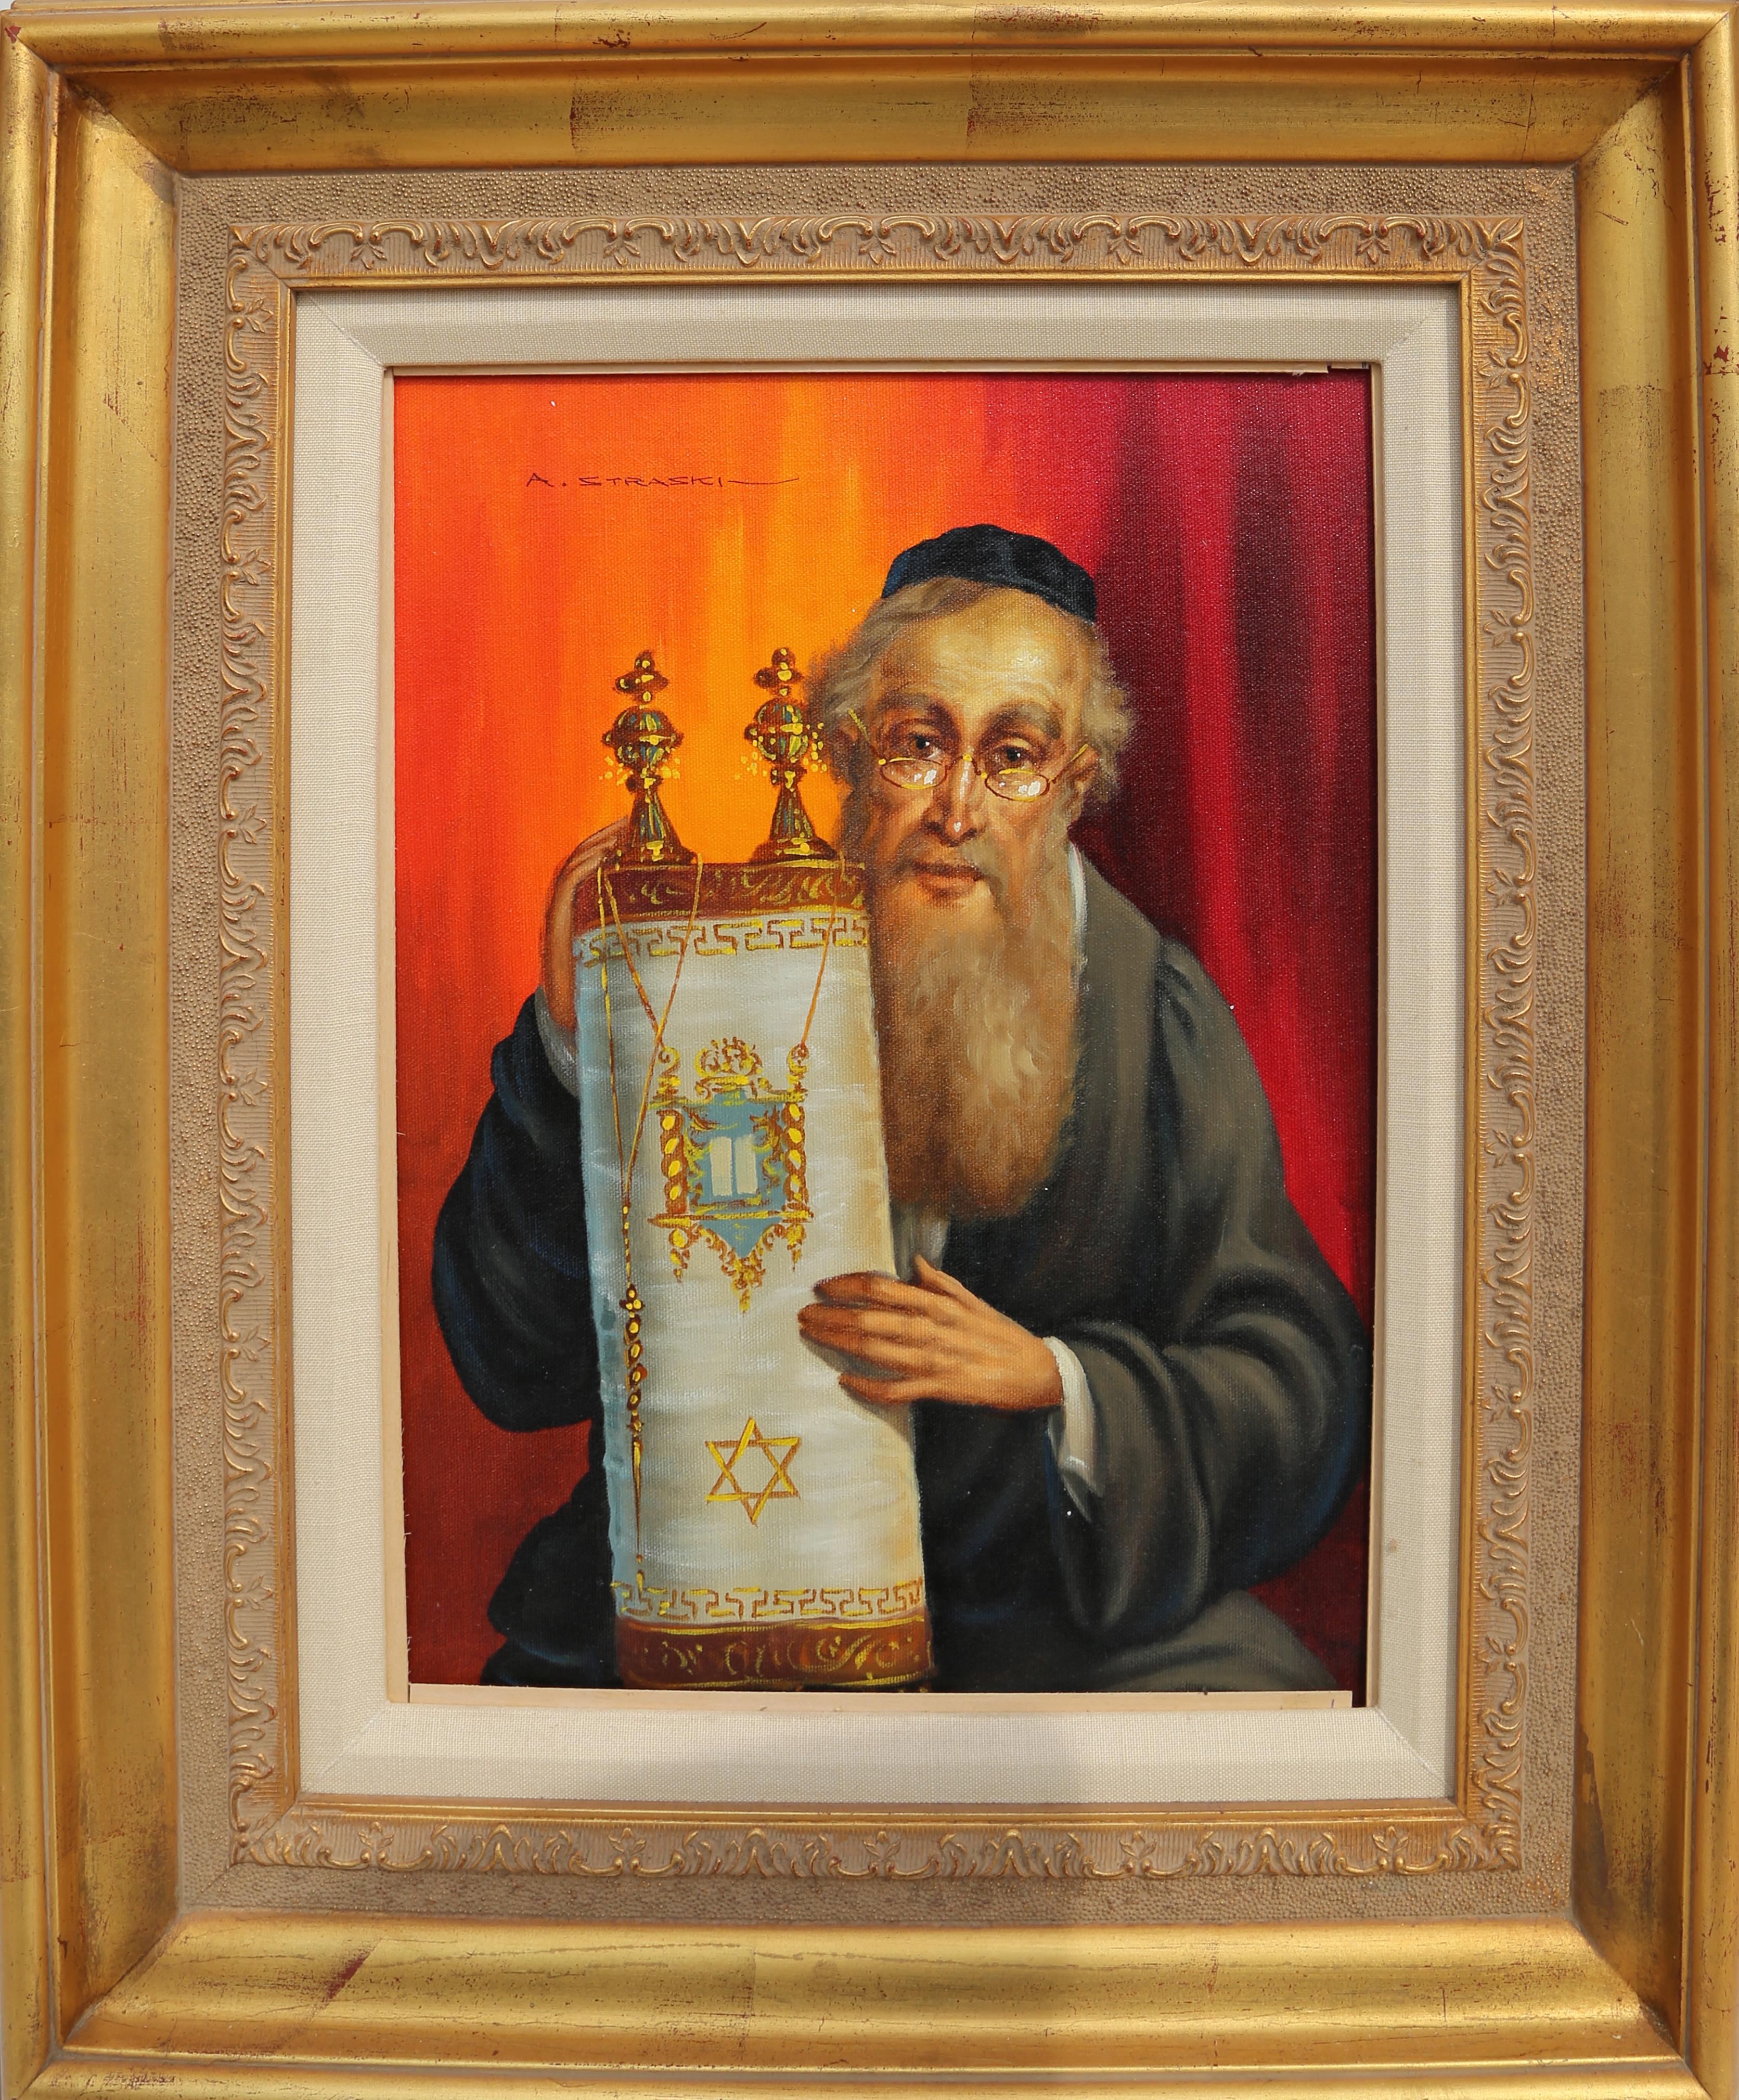 Rabbi und Torah, Ölgemälde von Abraham Straski